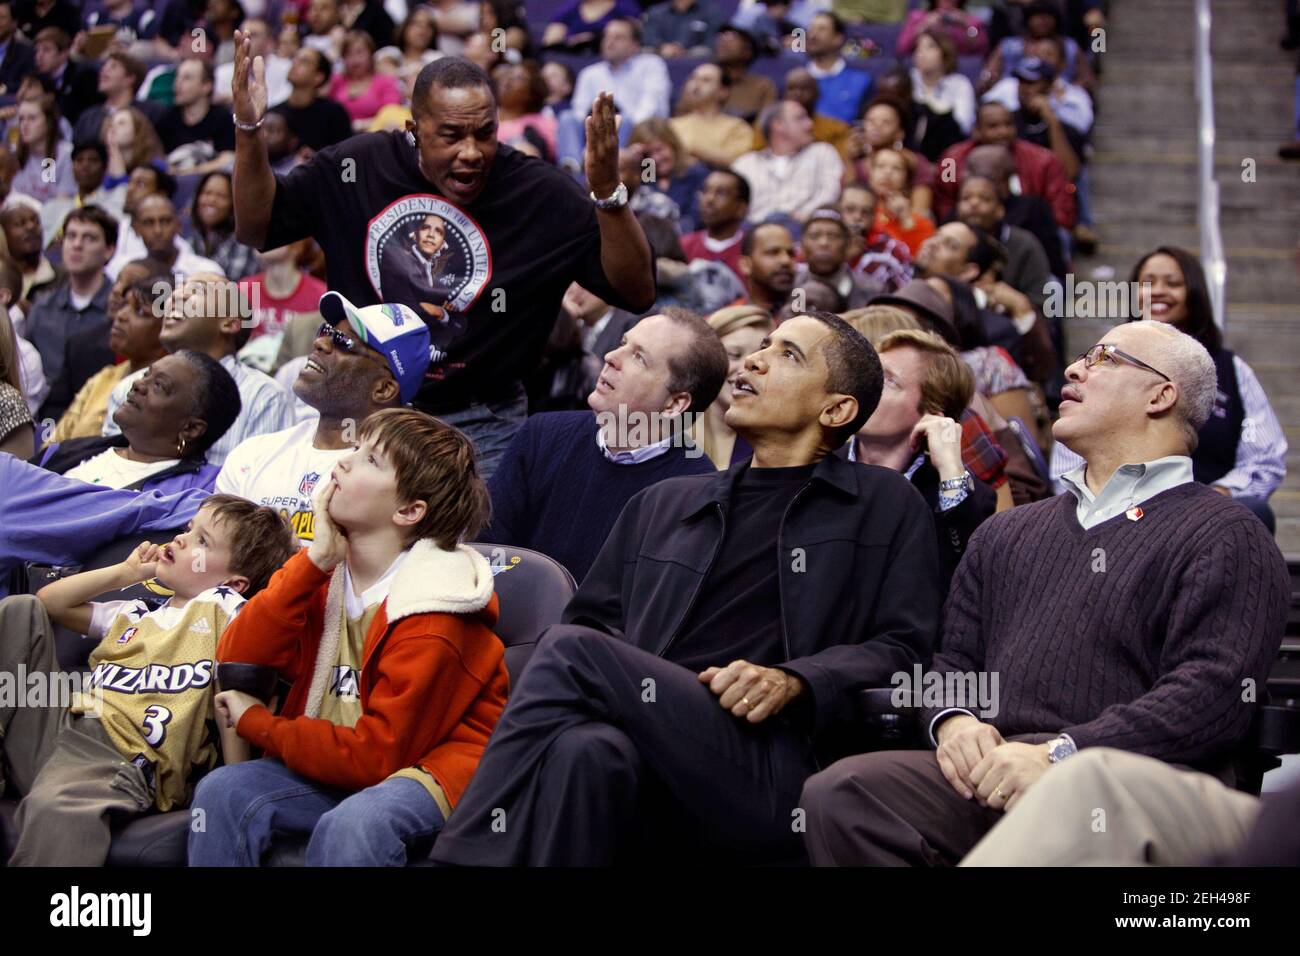 President Barack Obama attends a Washington Wizards vs Chicago Bulls basketball game at the Verizon Center, Washington, D.C., Feb. 27, 2009. Stock Photo